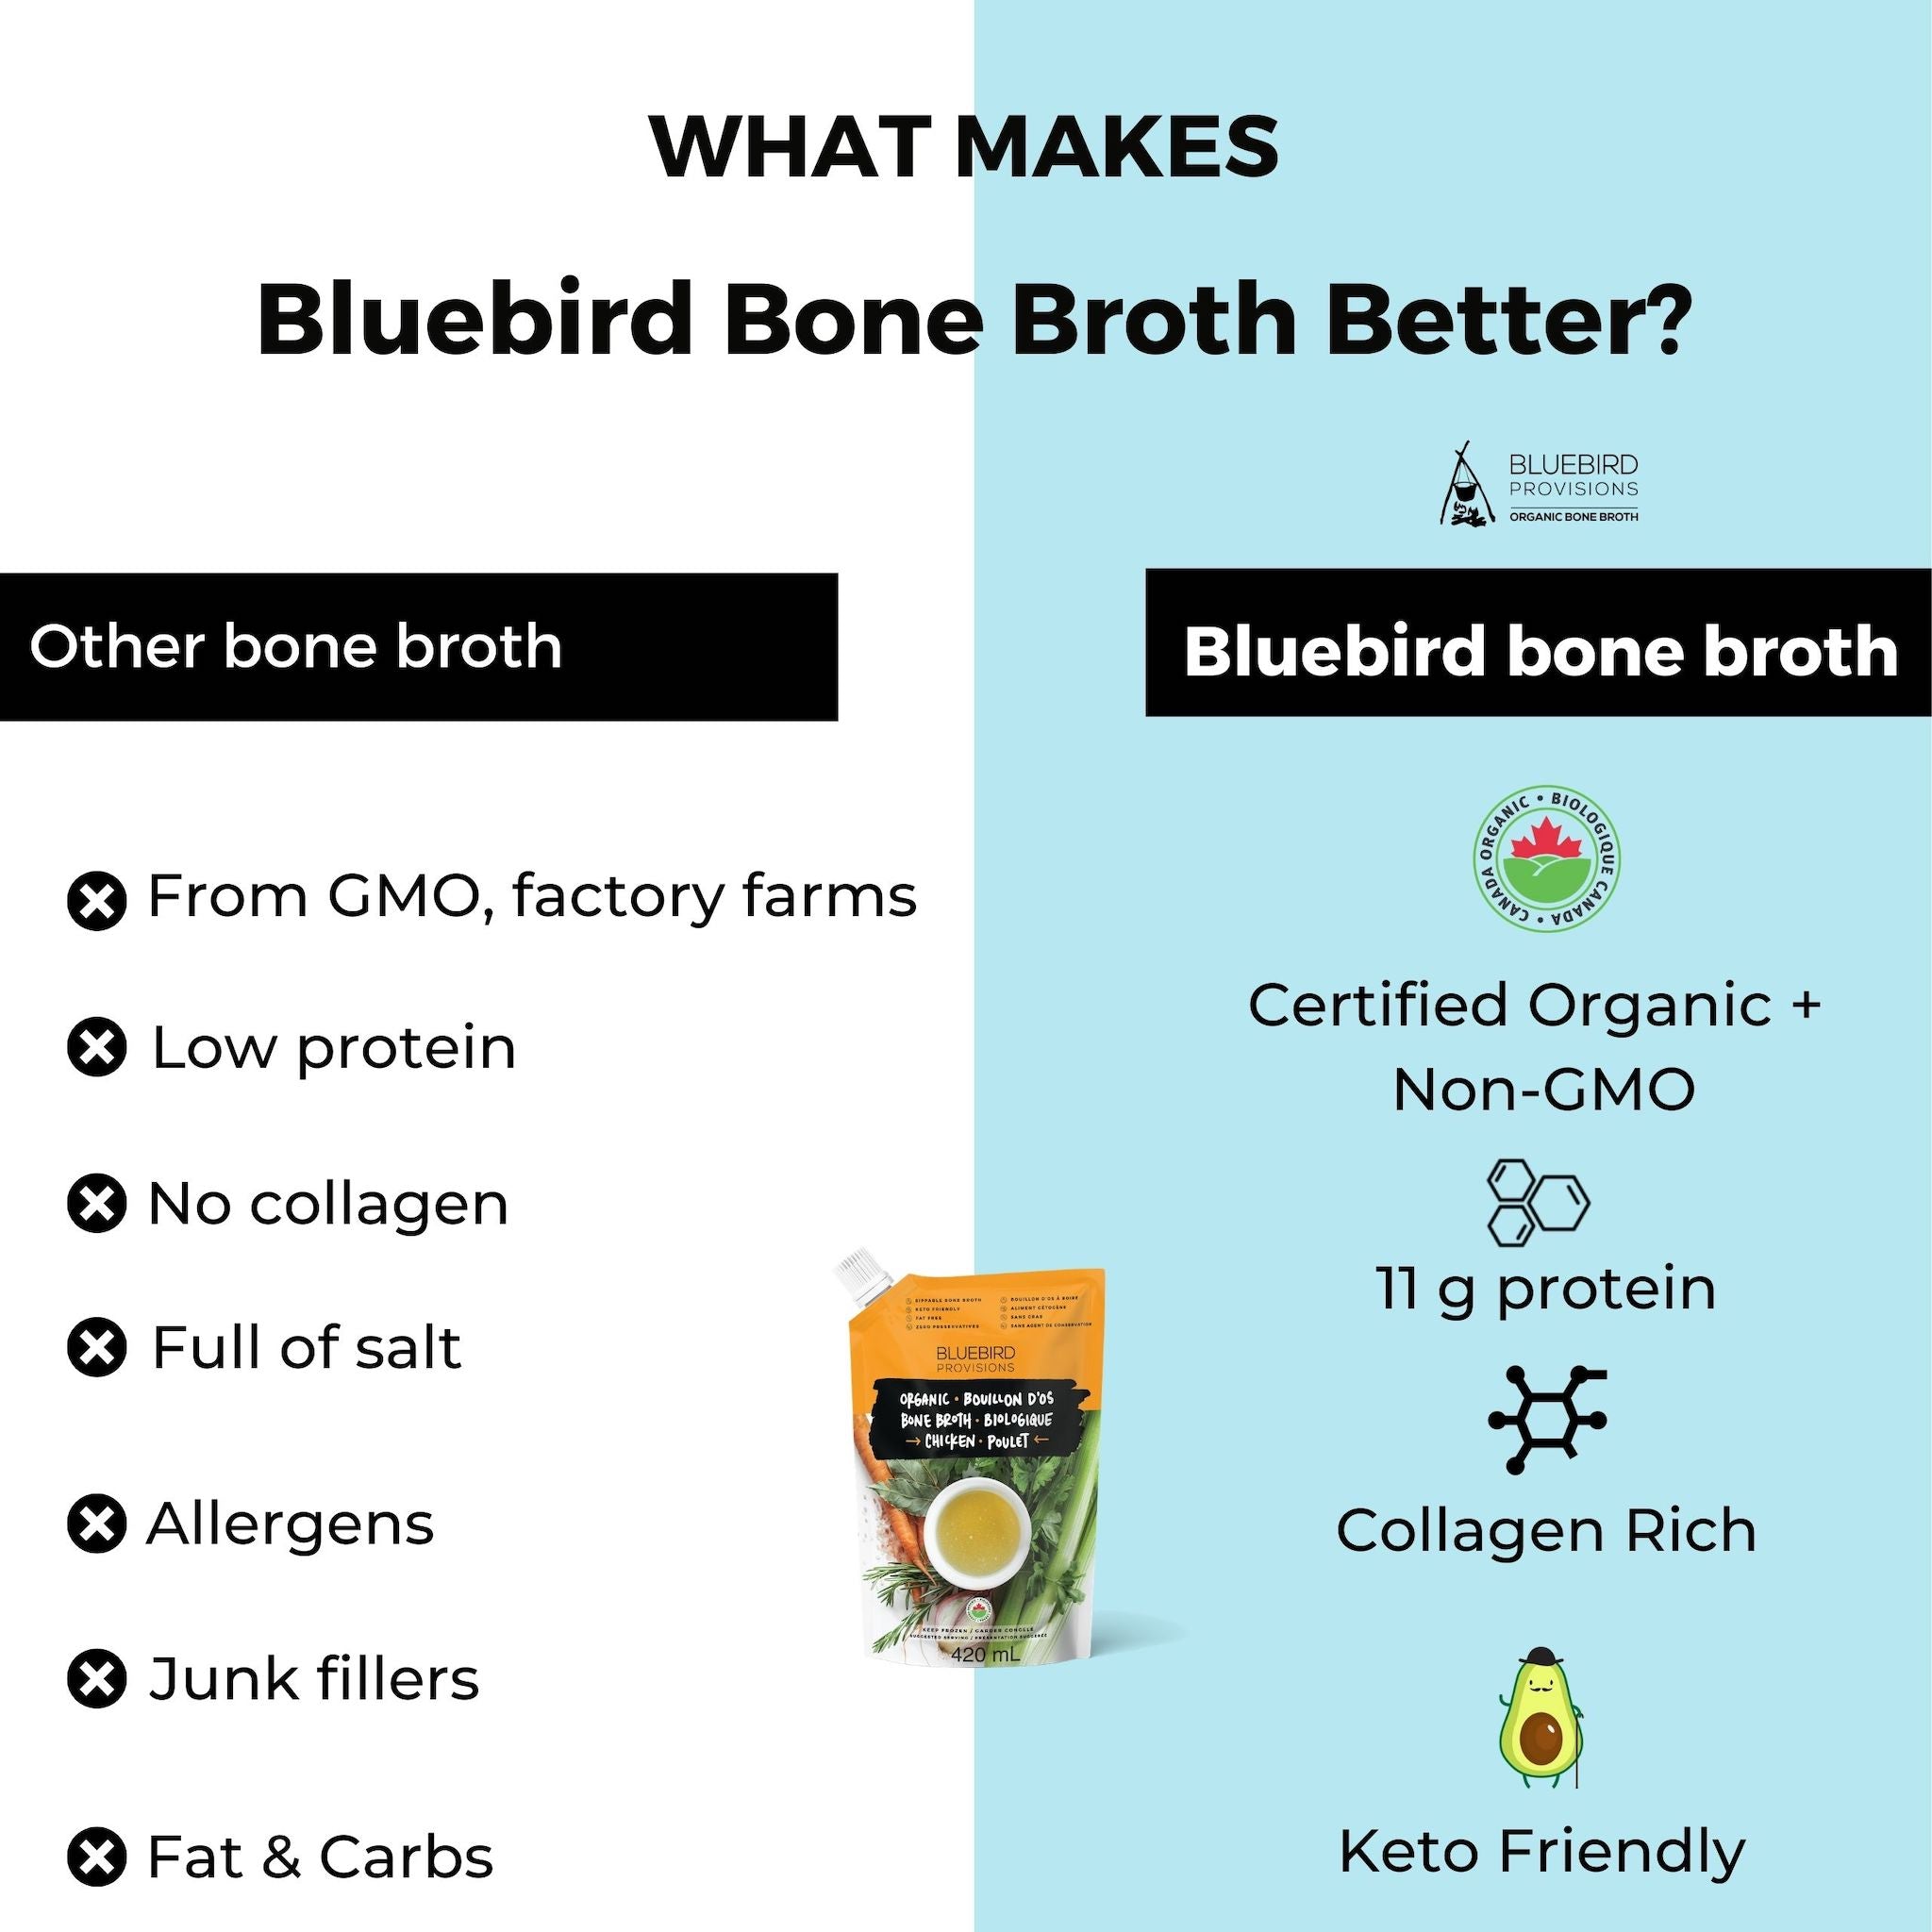 bluebird provisions organic chicken bone broth vs. other bone broth